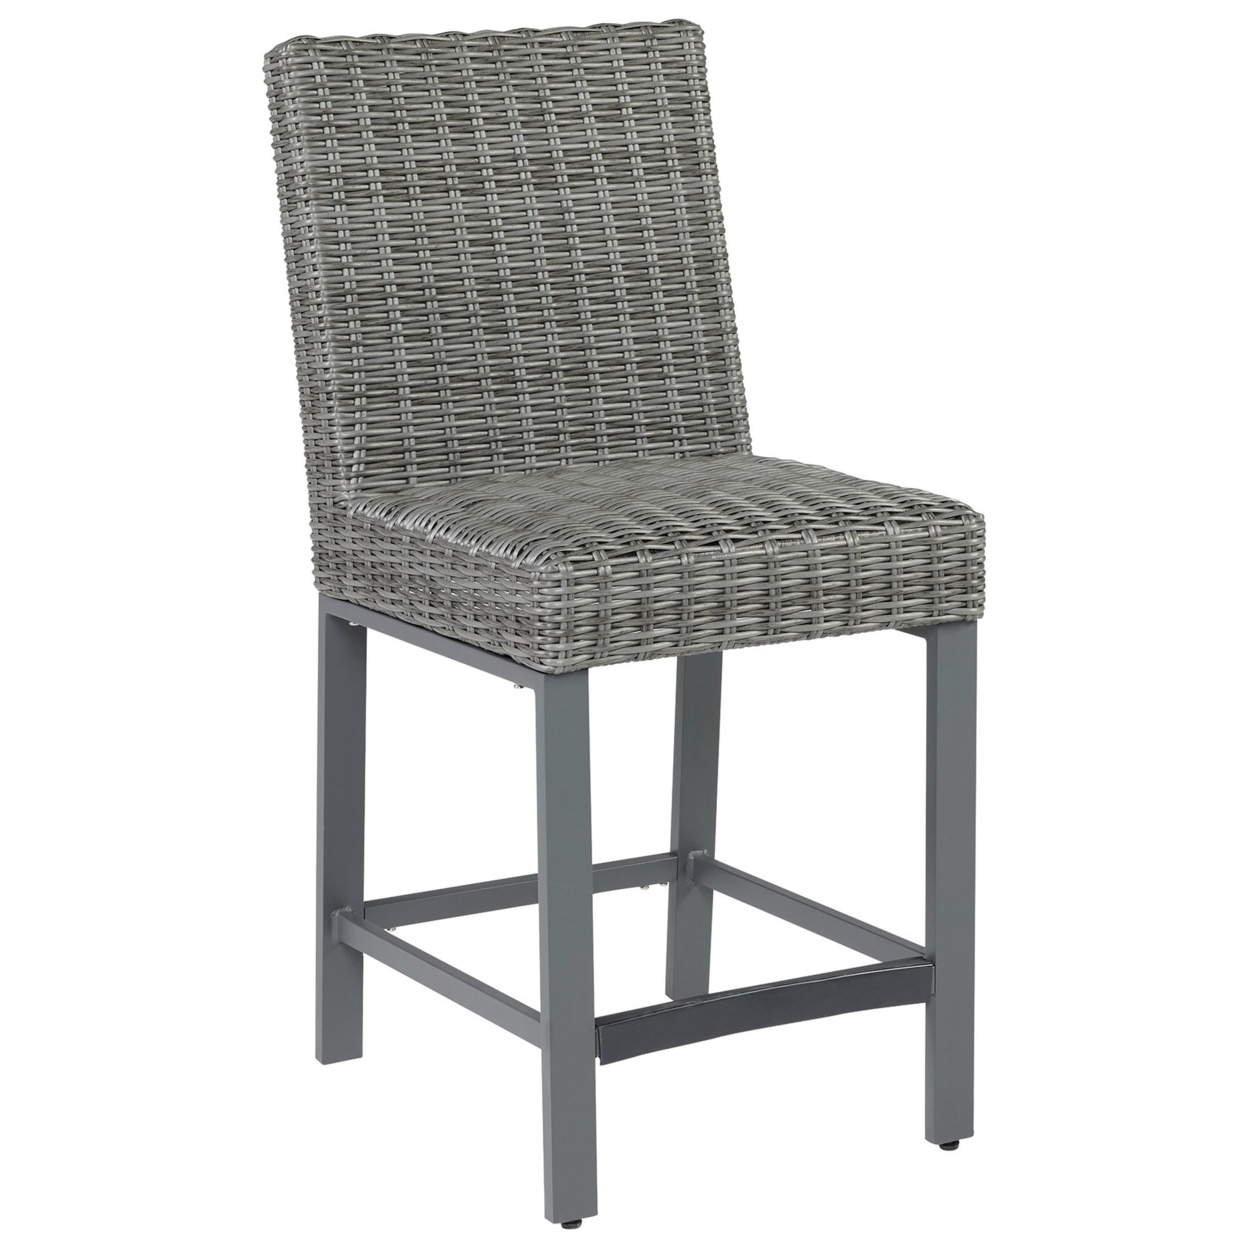 Jack 28 Inch Outdoor Barstool Chair, Tall Backrest, Set Of 2, Aluminum,Gray- Saltoro Sherpi